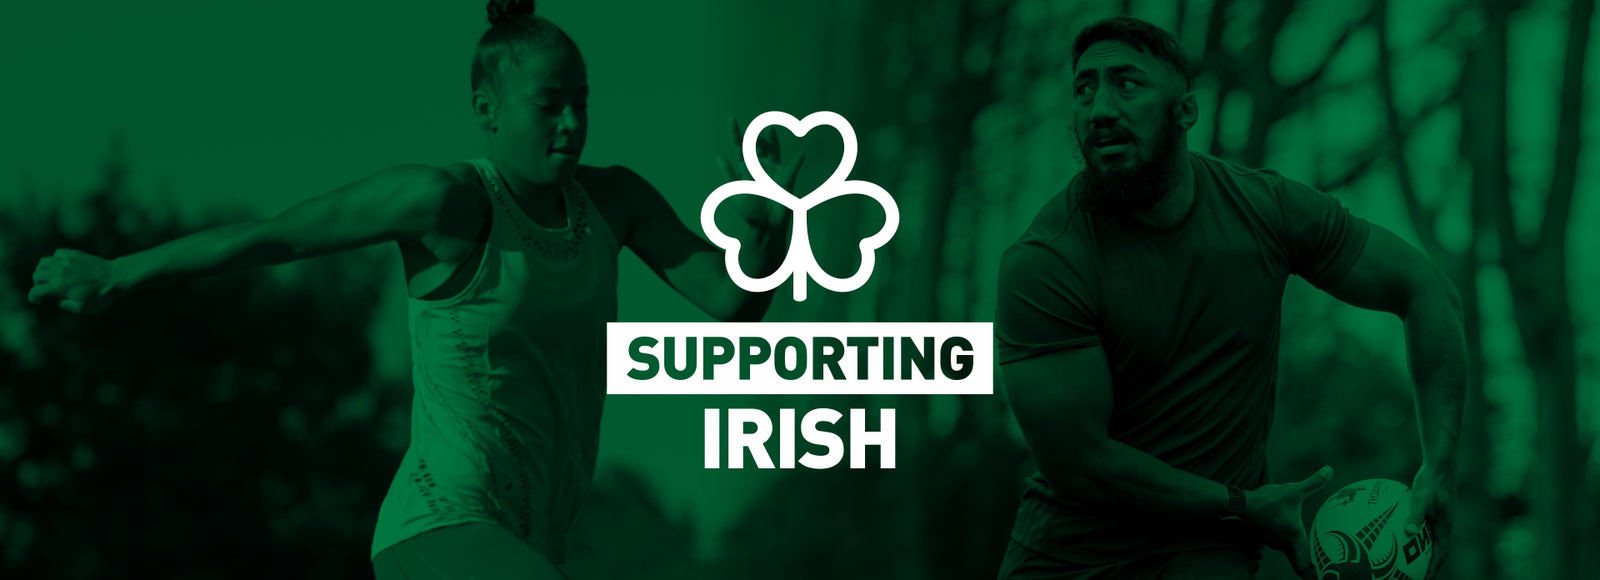 Intersport Elverys: Supporting Irish Athletes & Team Sports